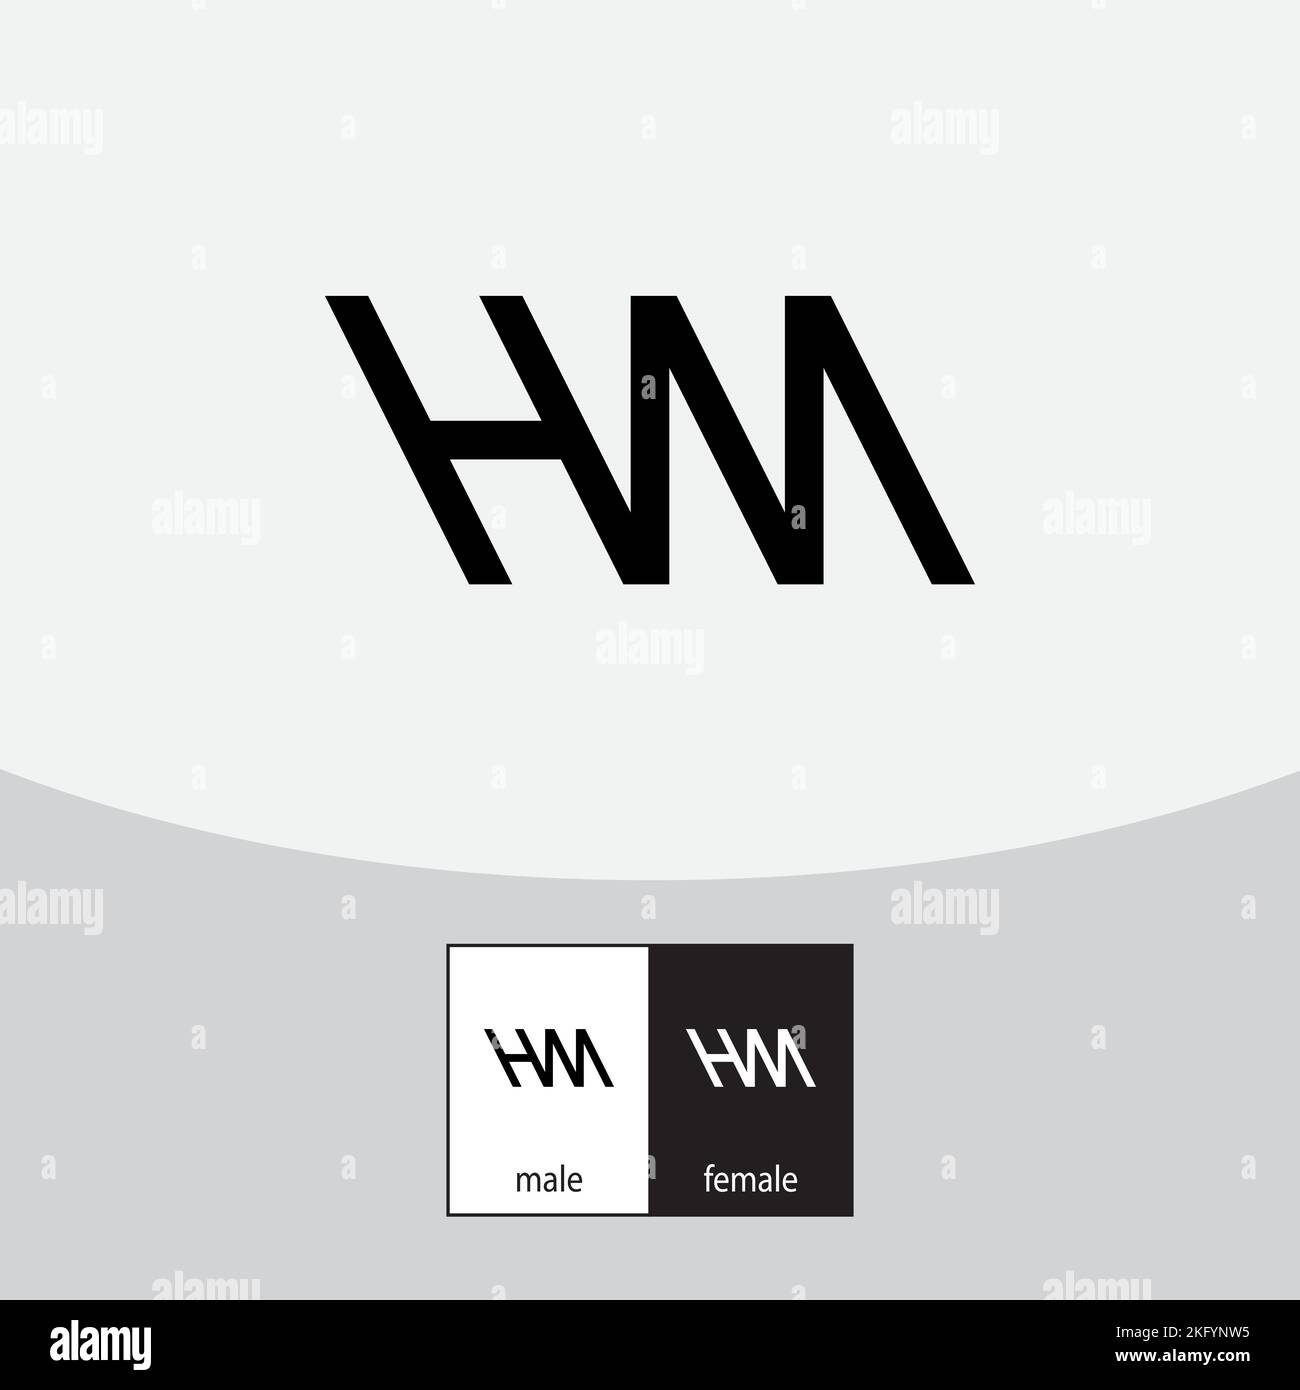 HM logo design (2365719)